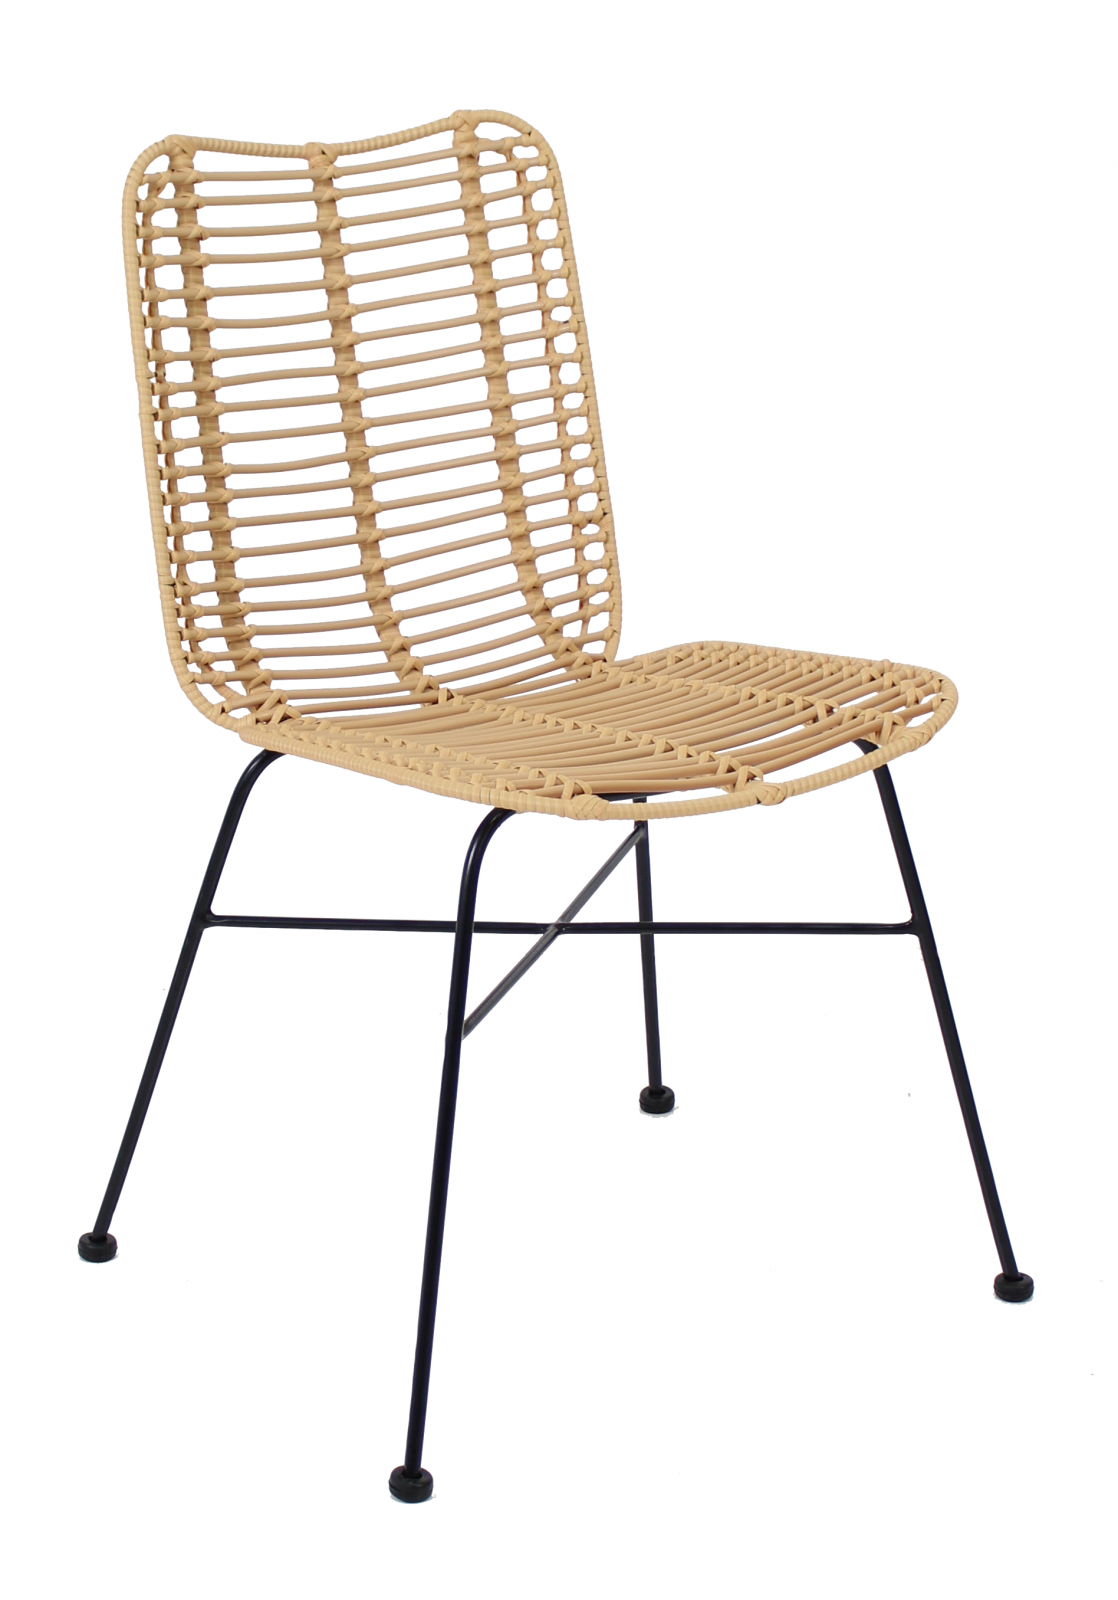 Rental of beige rattan palm chair